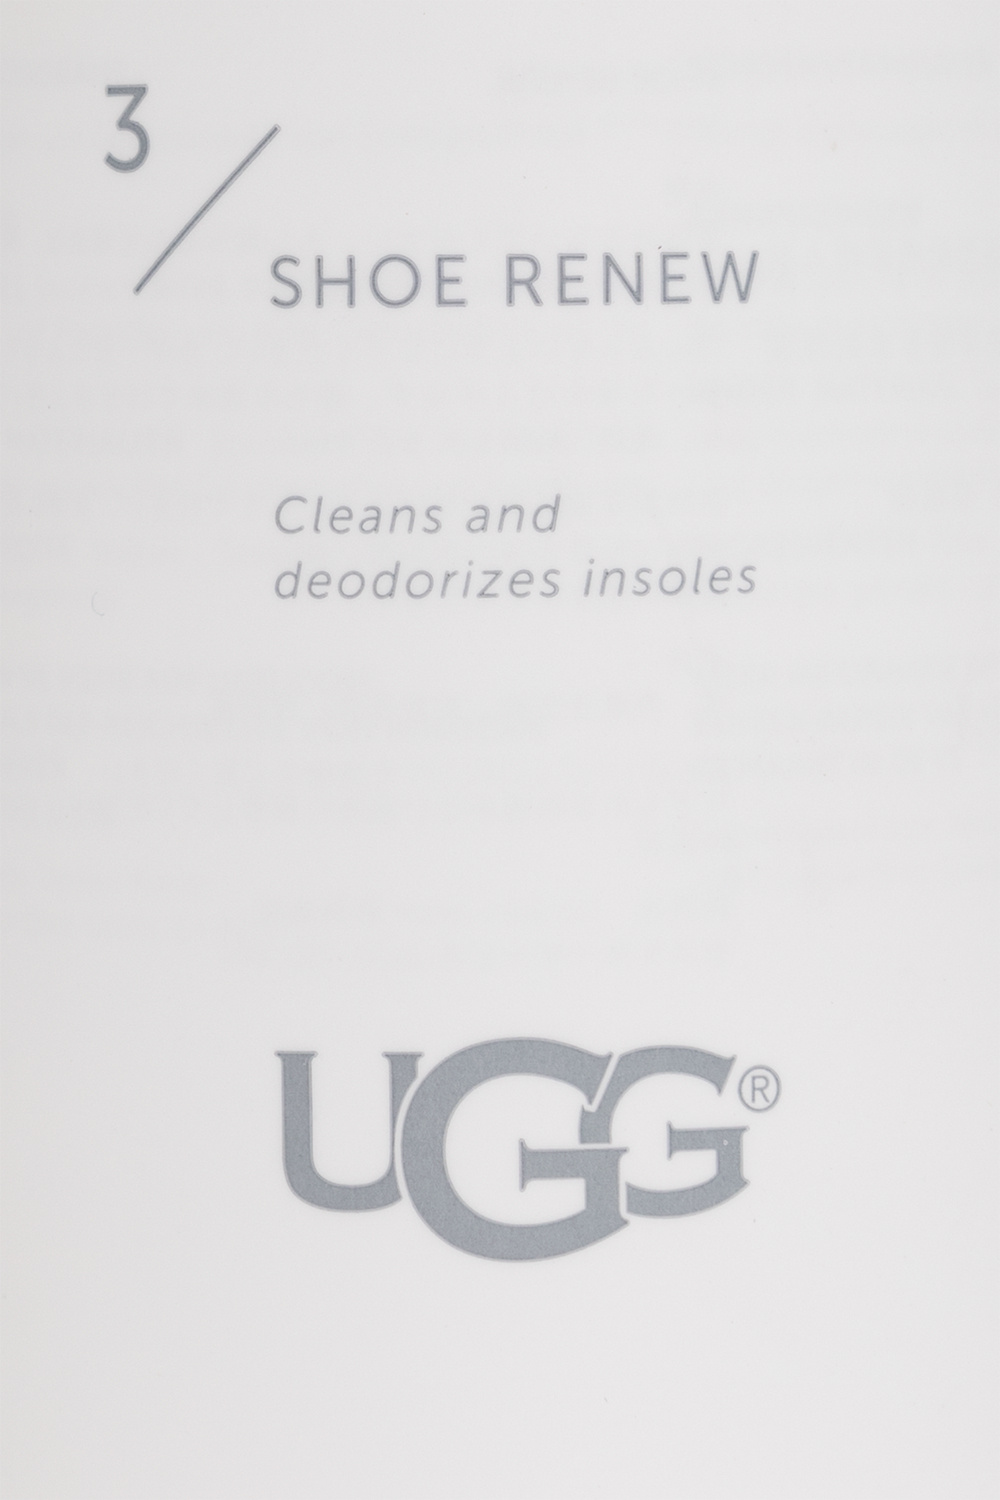 UGG ‘Shoe Renew’ spray